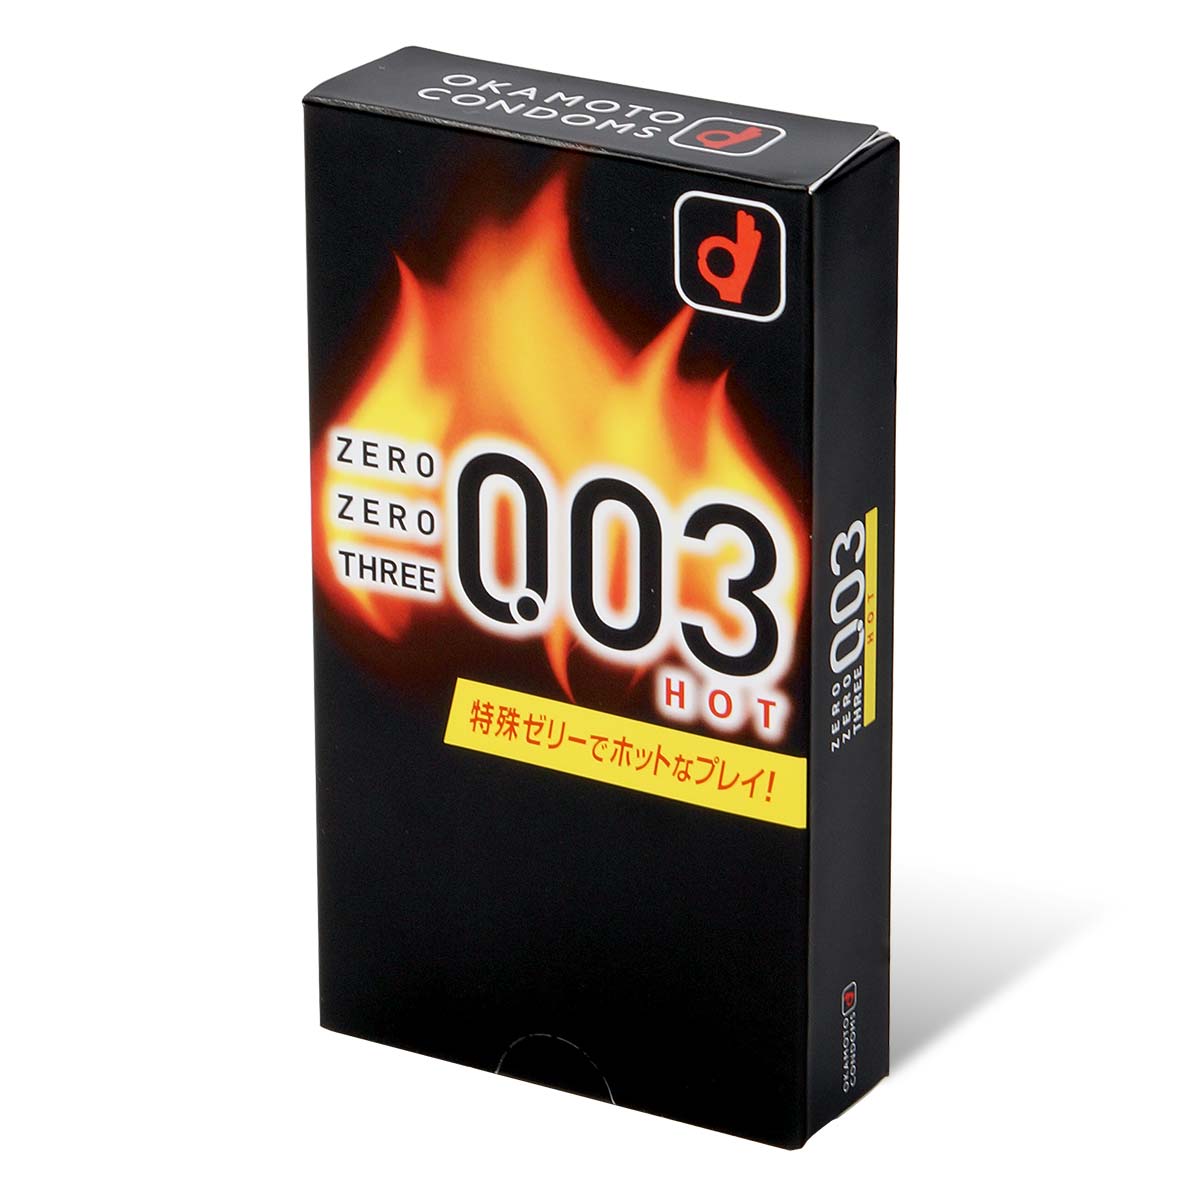 Zero Zero Three 0.03 Hot (Japan Edition) 10's Pack Latex Condom (Short Expiry)-p_1